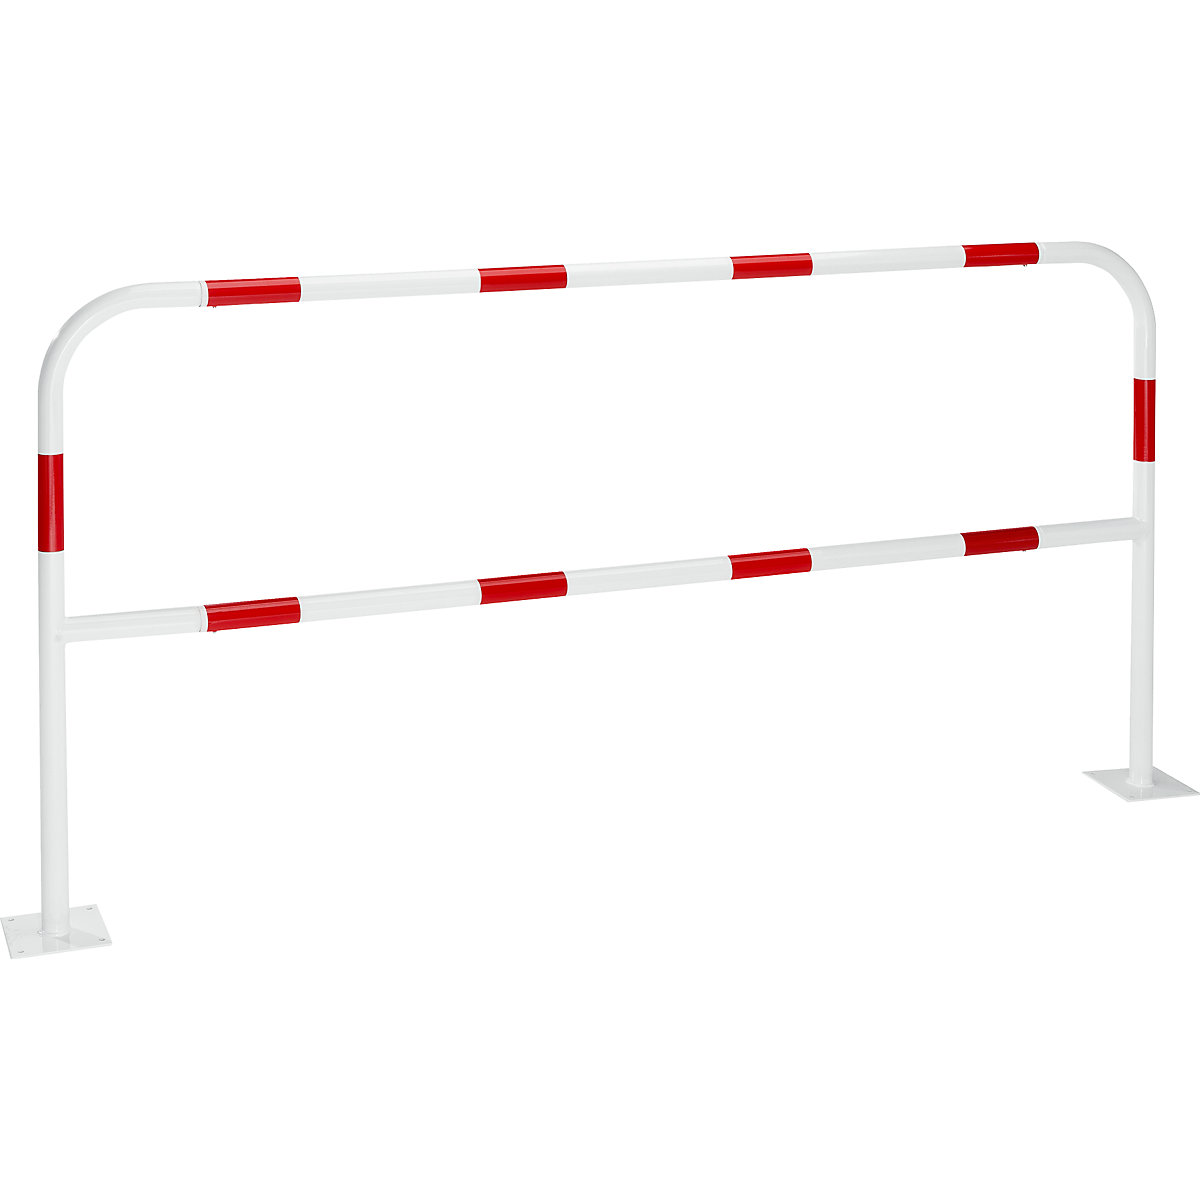 Arco de seguridad para zonas peligrosas, para atornillar, rojo / blanco, anchura 2000 mm-12